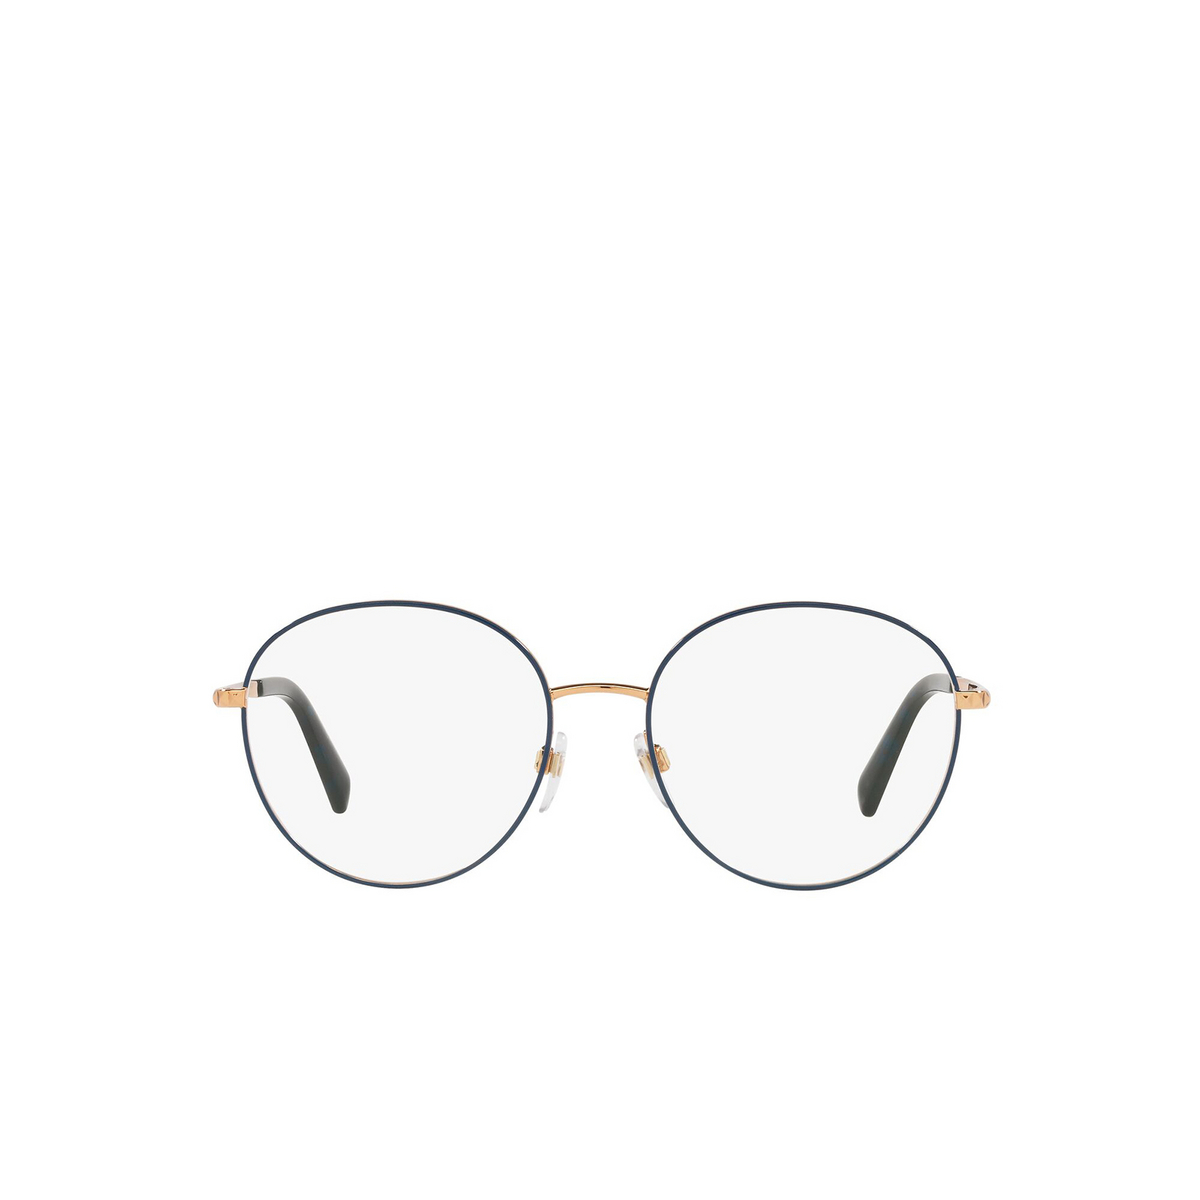 Valentino® Round Sunglasses: VA1025 color Blue / Rose Gold 3031 - front view.